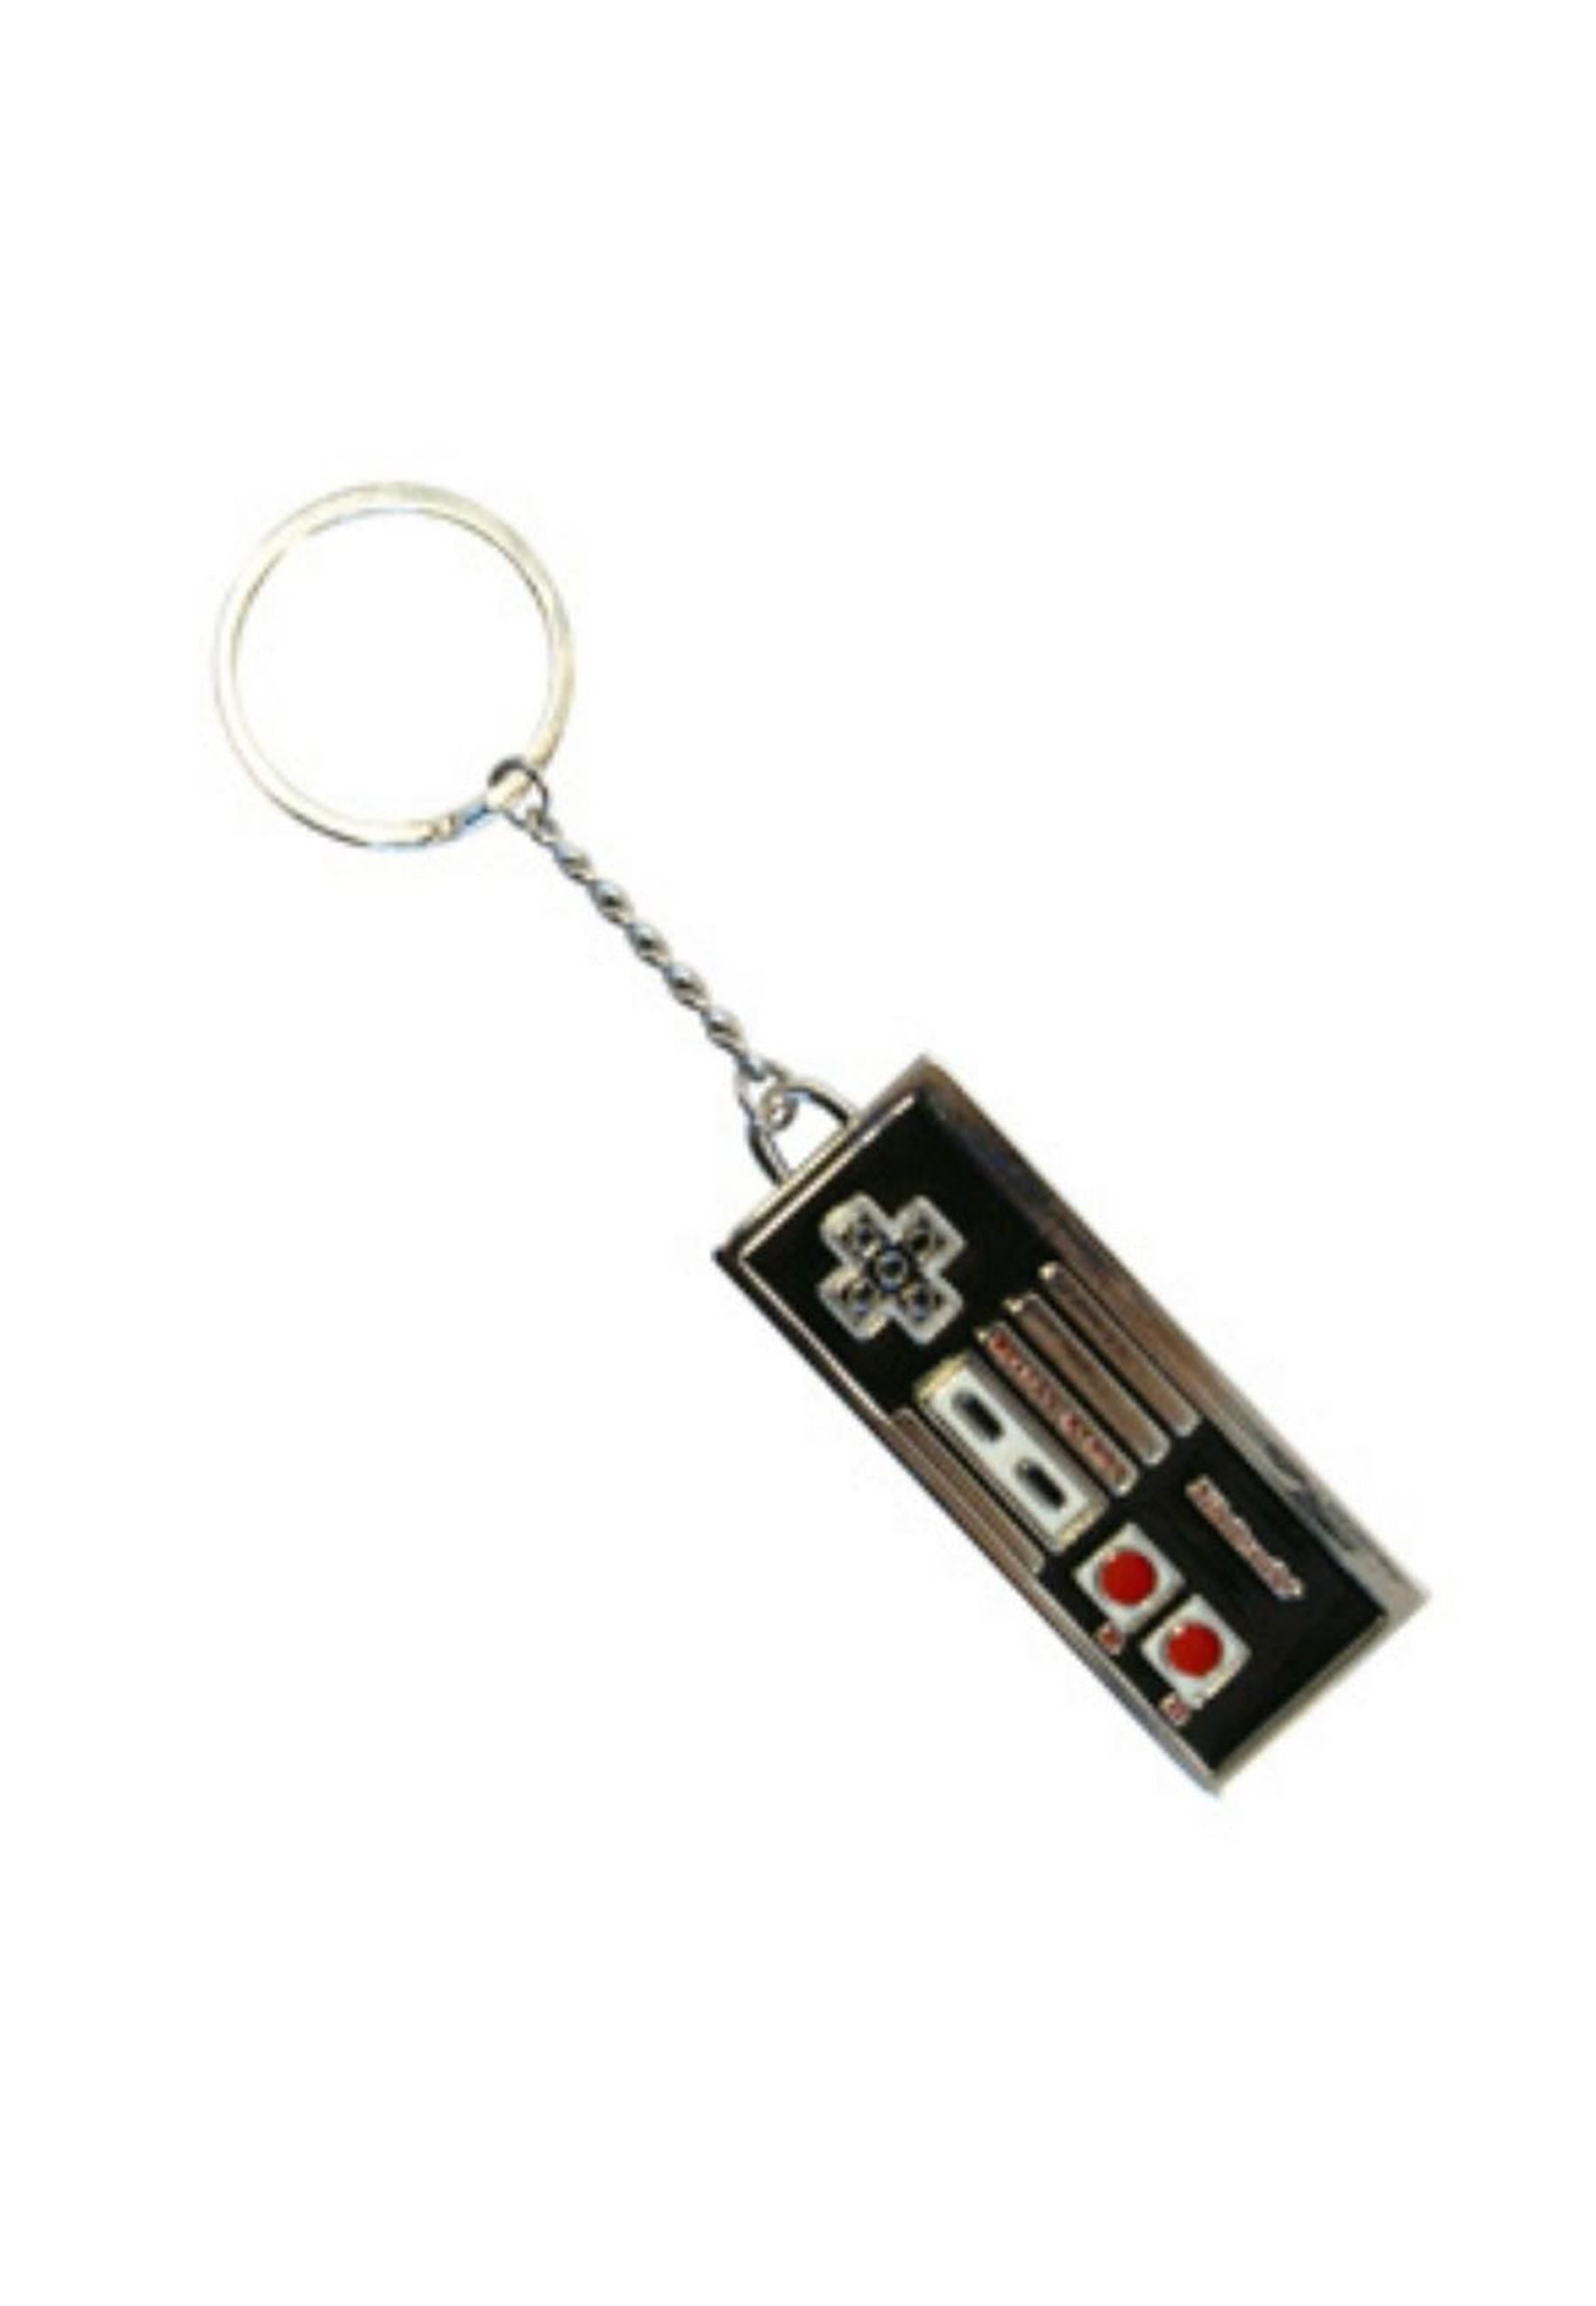 NES controller enameled metal Keychain Gamesellers.nl